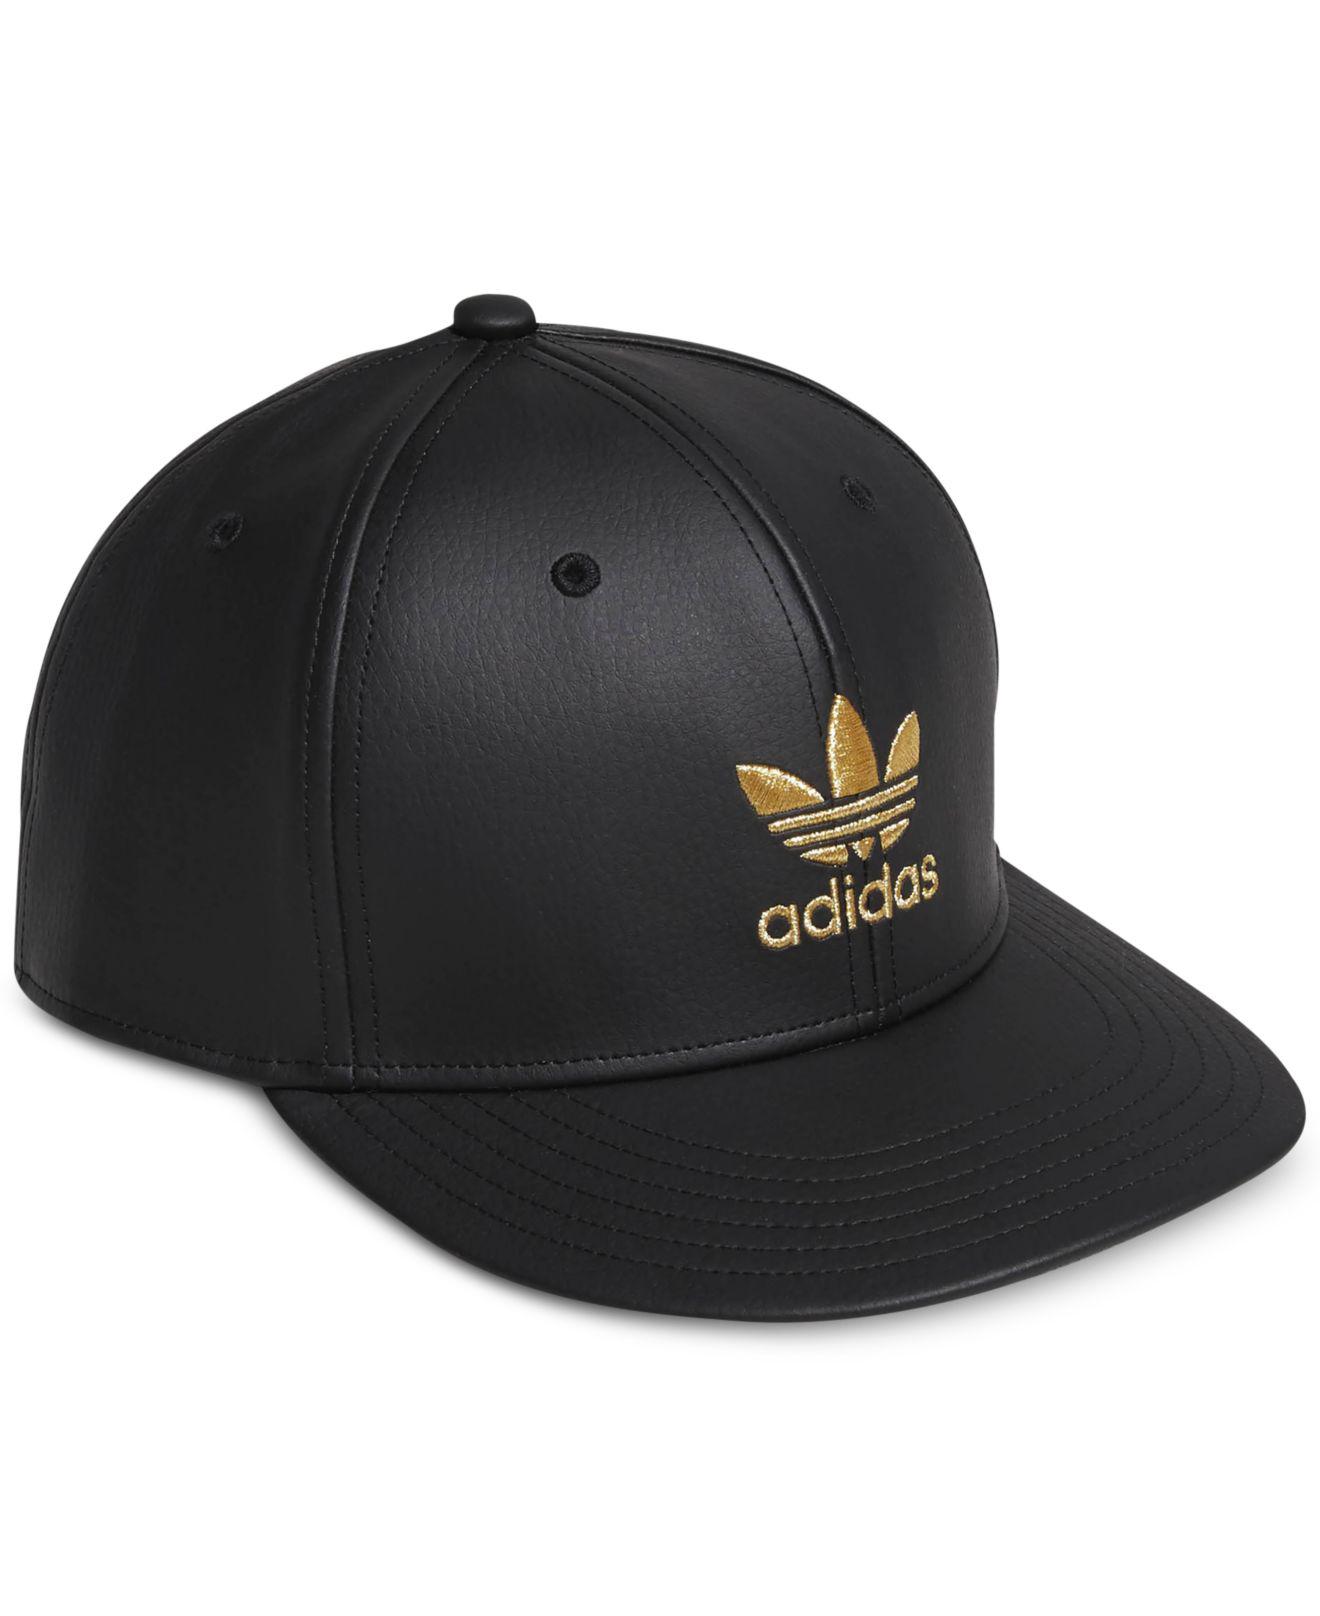 adidas Originals Faux-leather Metallic-logo Hat in Black for Men Lyst